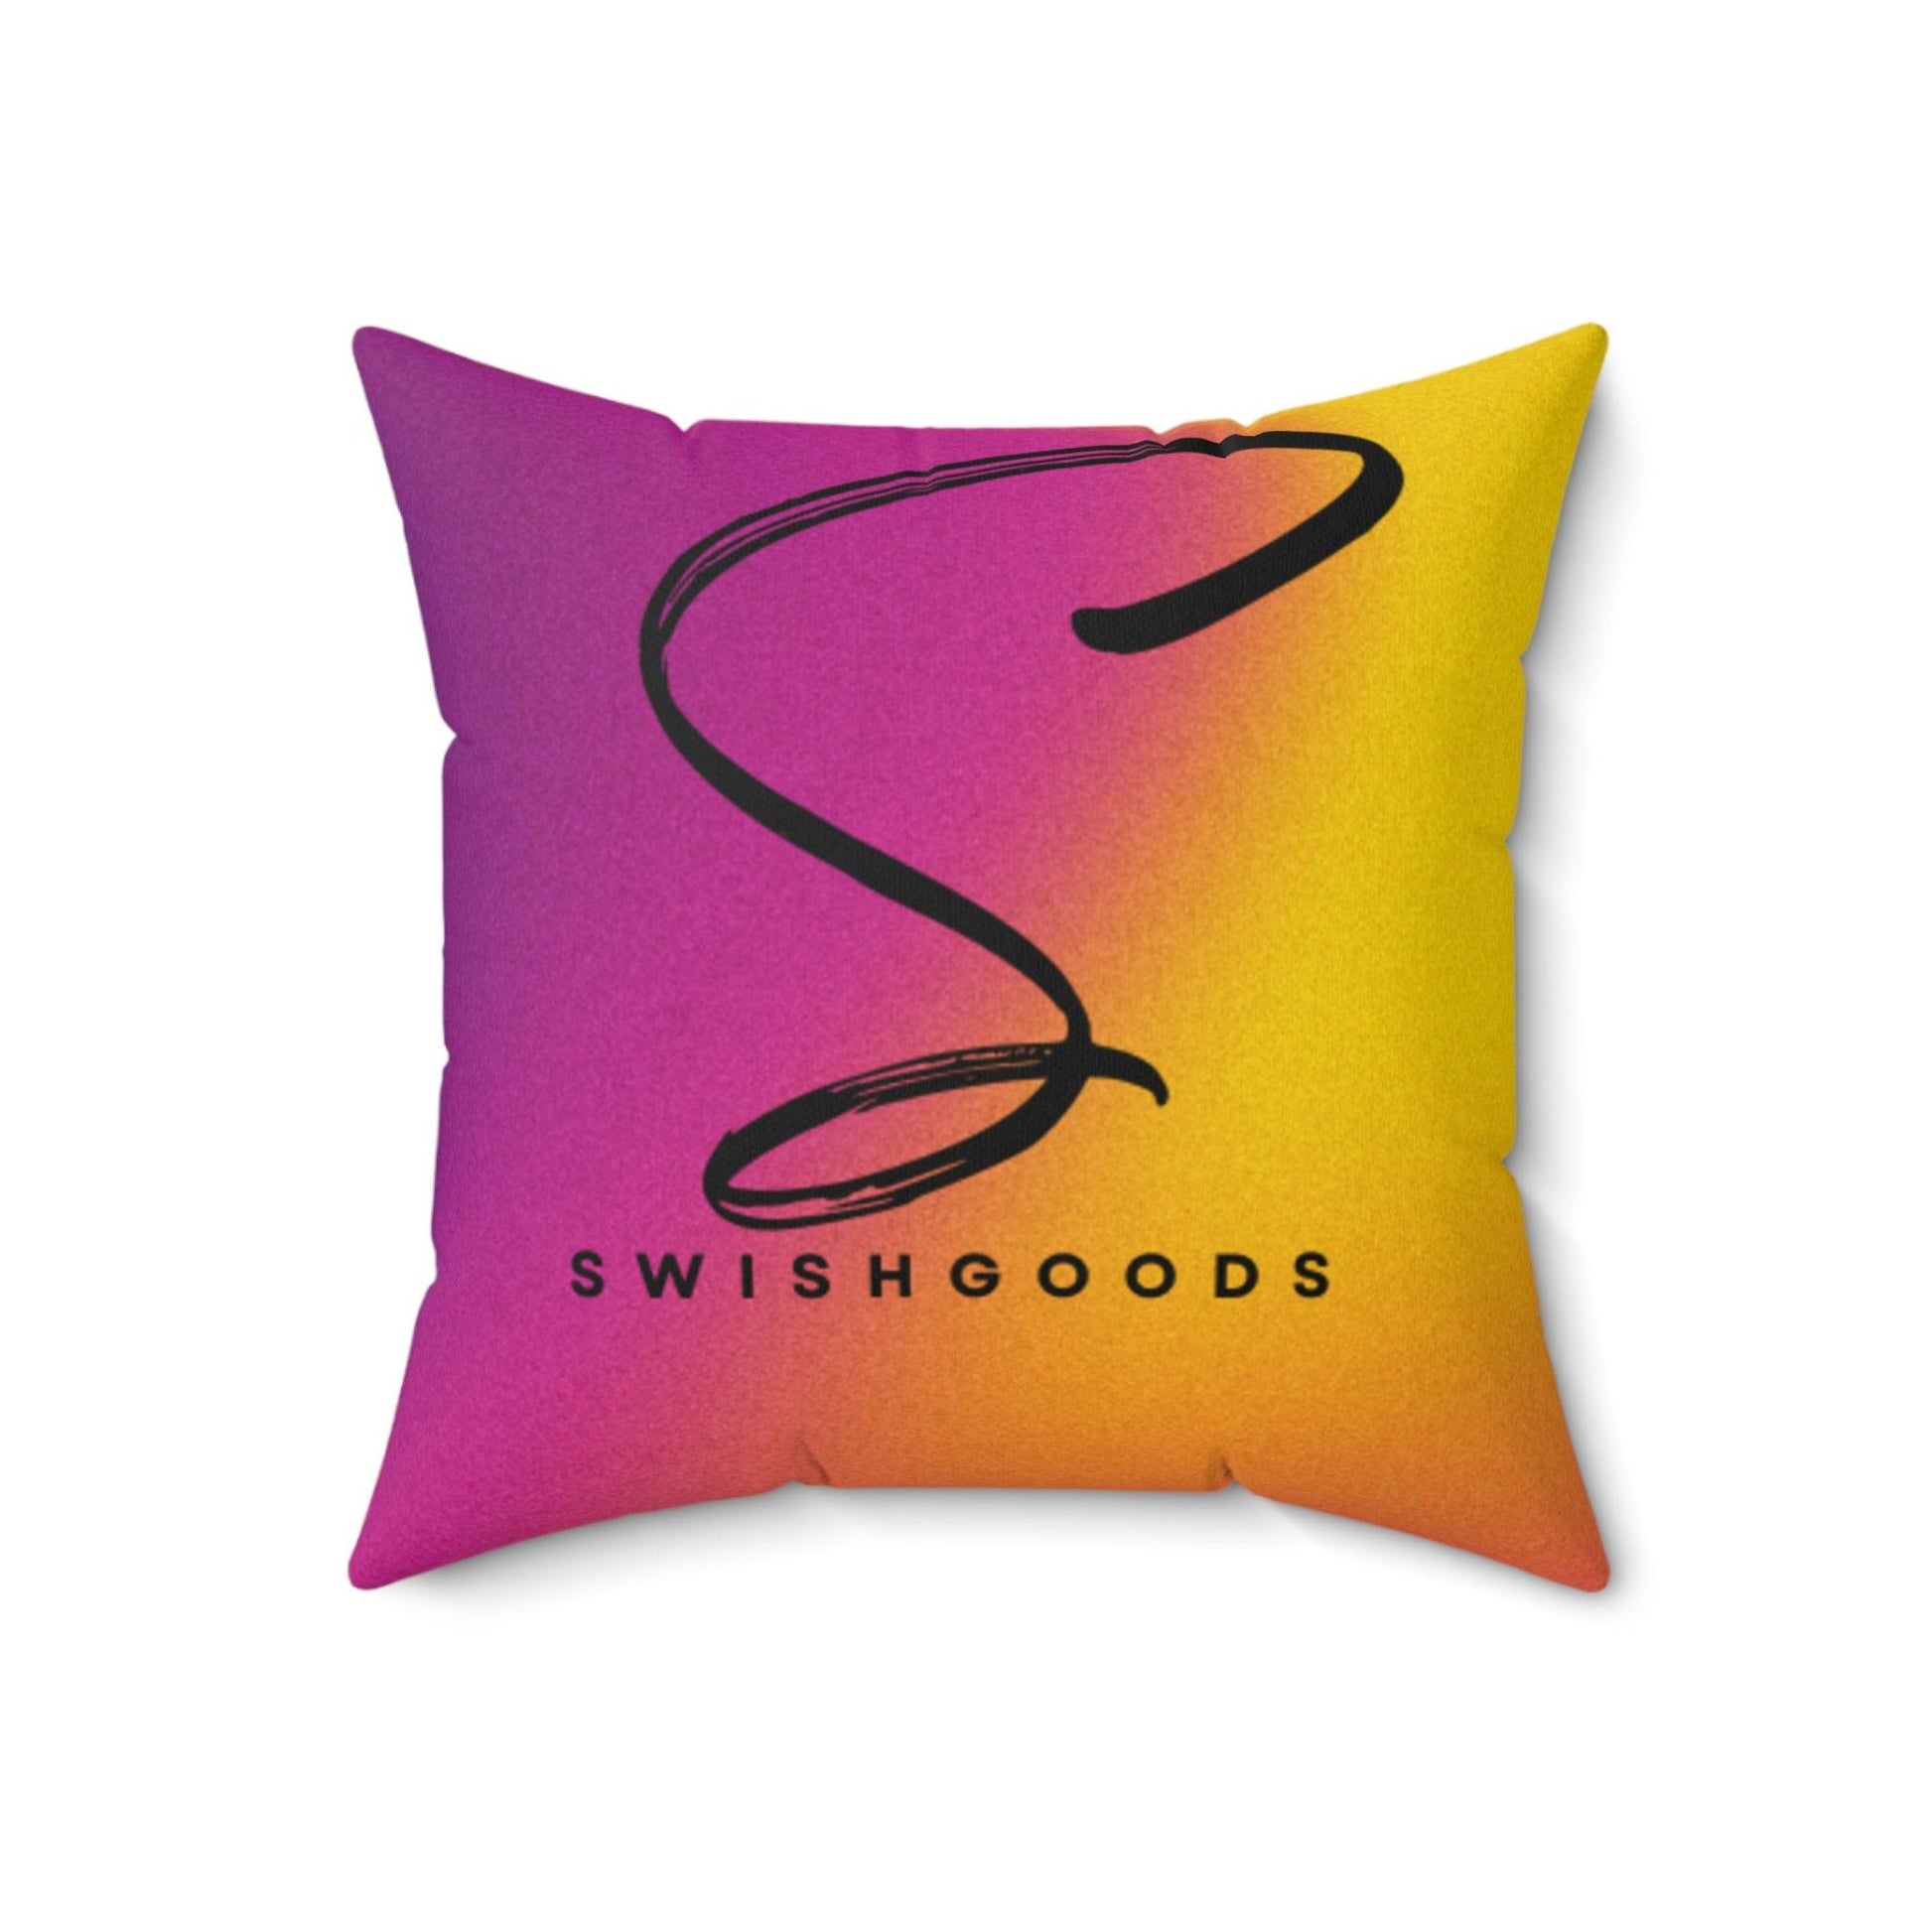 Spun Polyester Square Pillow - Swishgoods